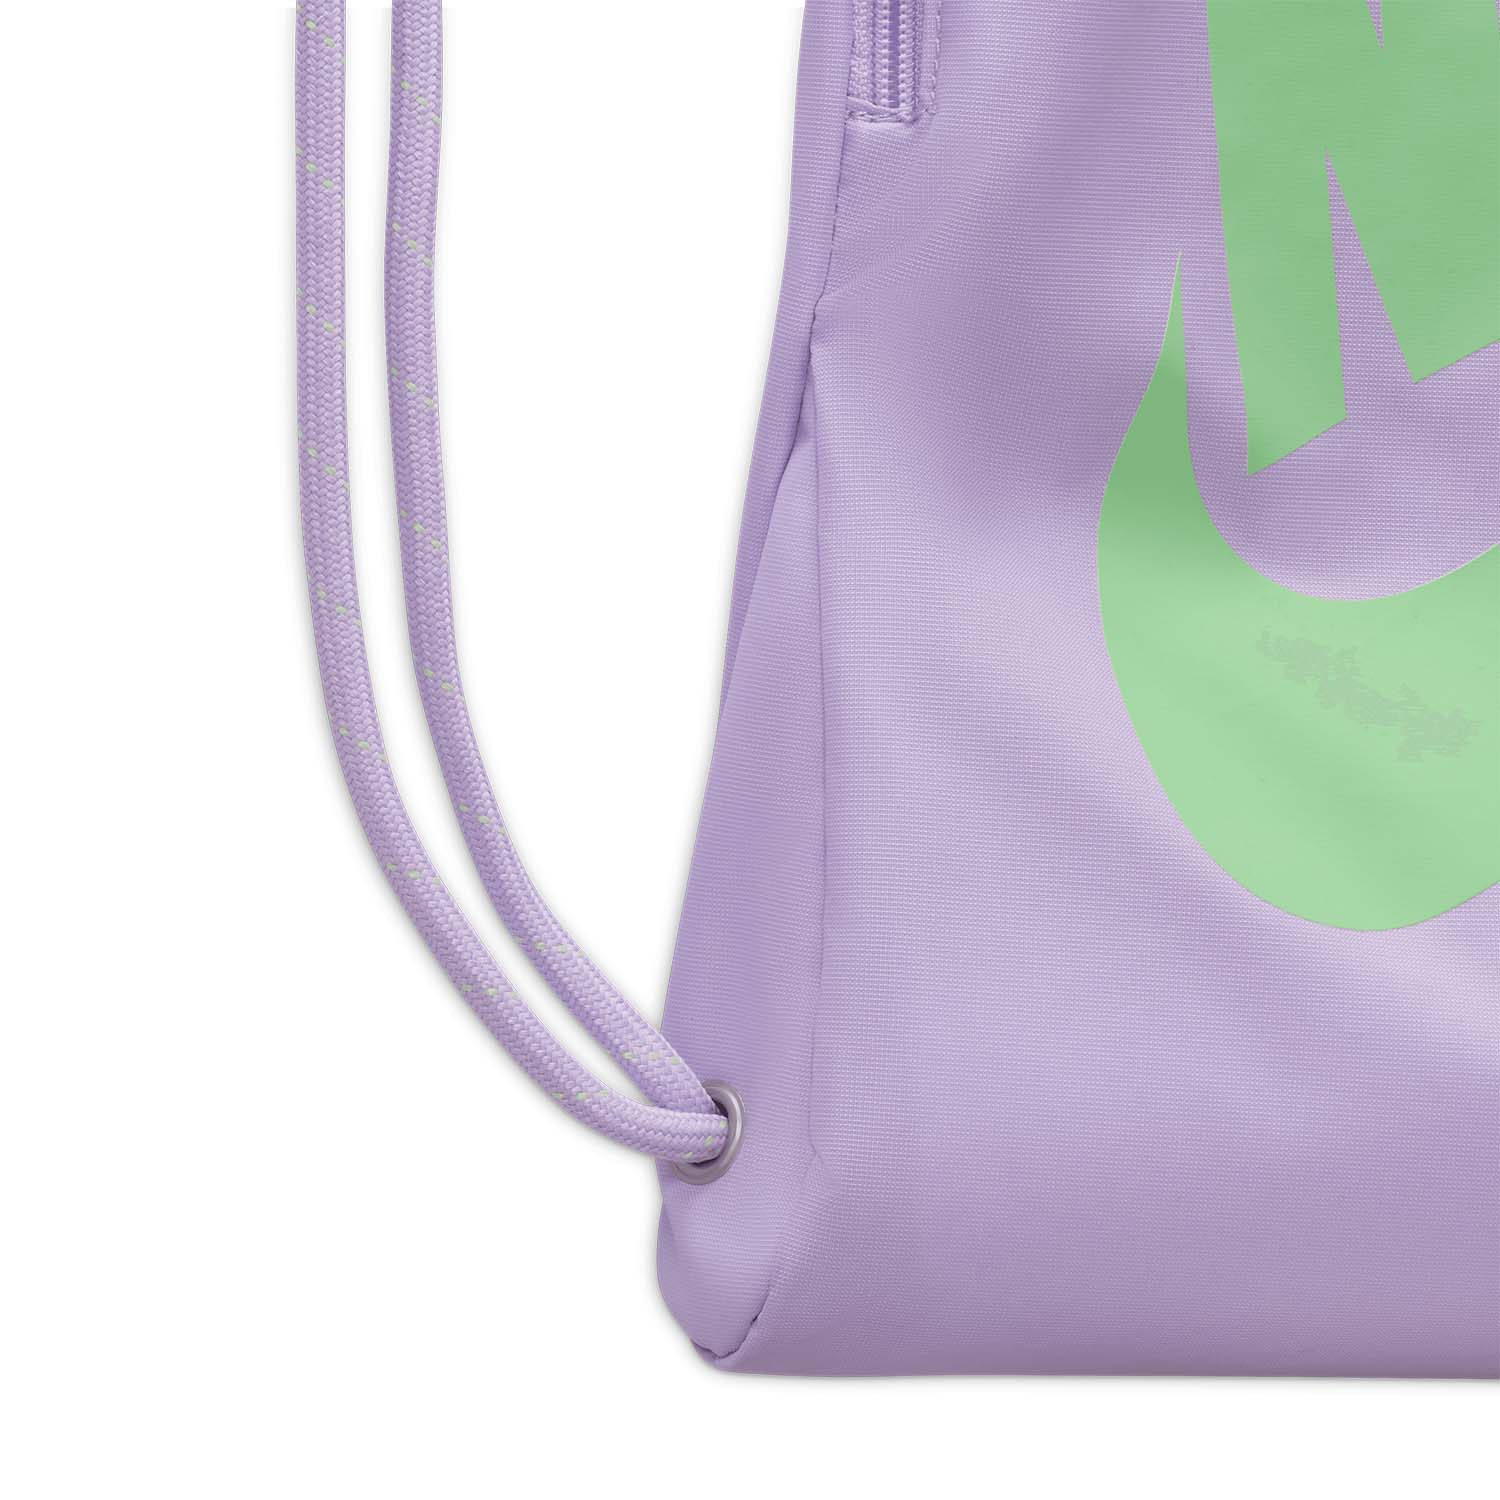 Nike Heritage Sacca - Lilac Bloom/Vapor Green